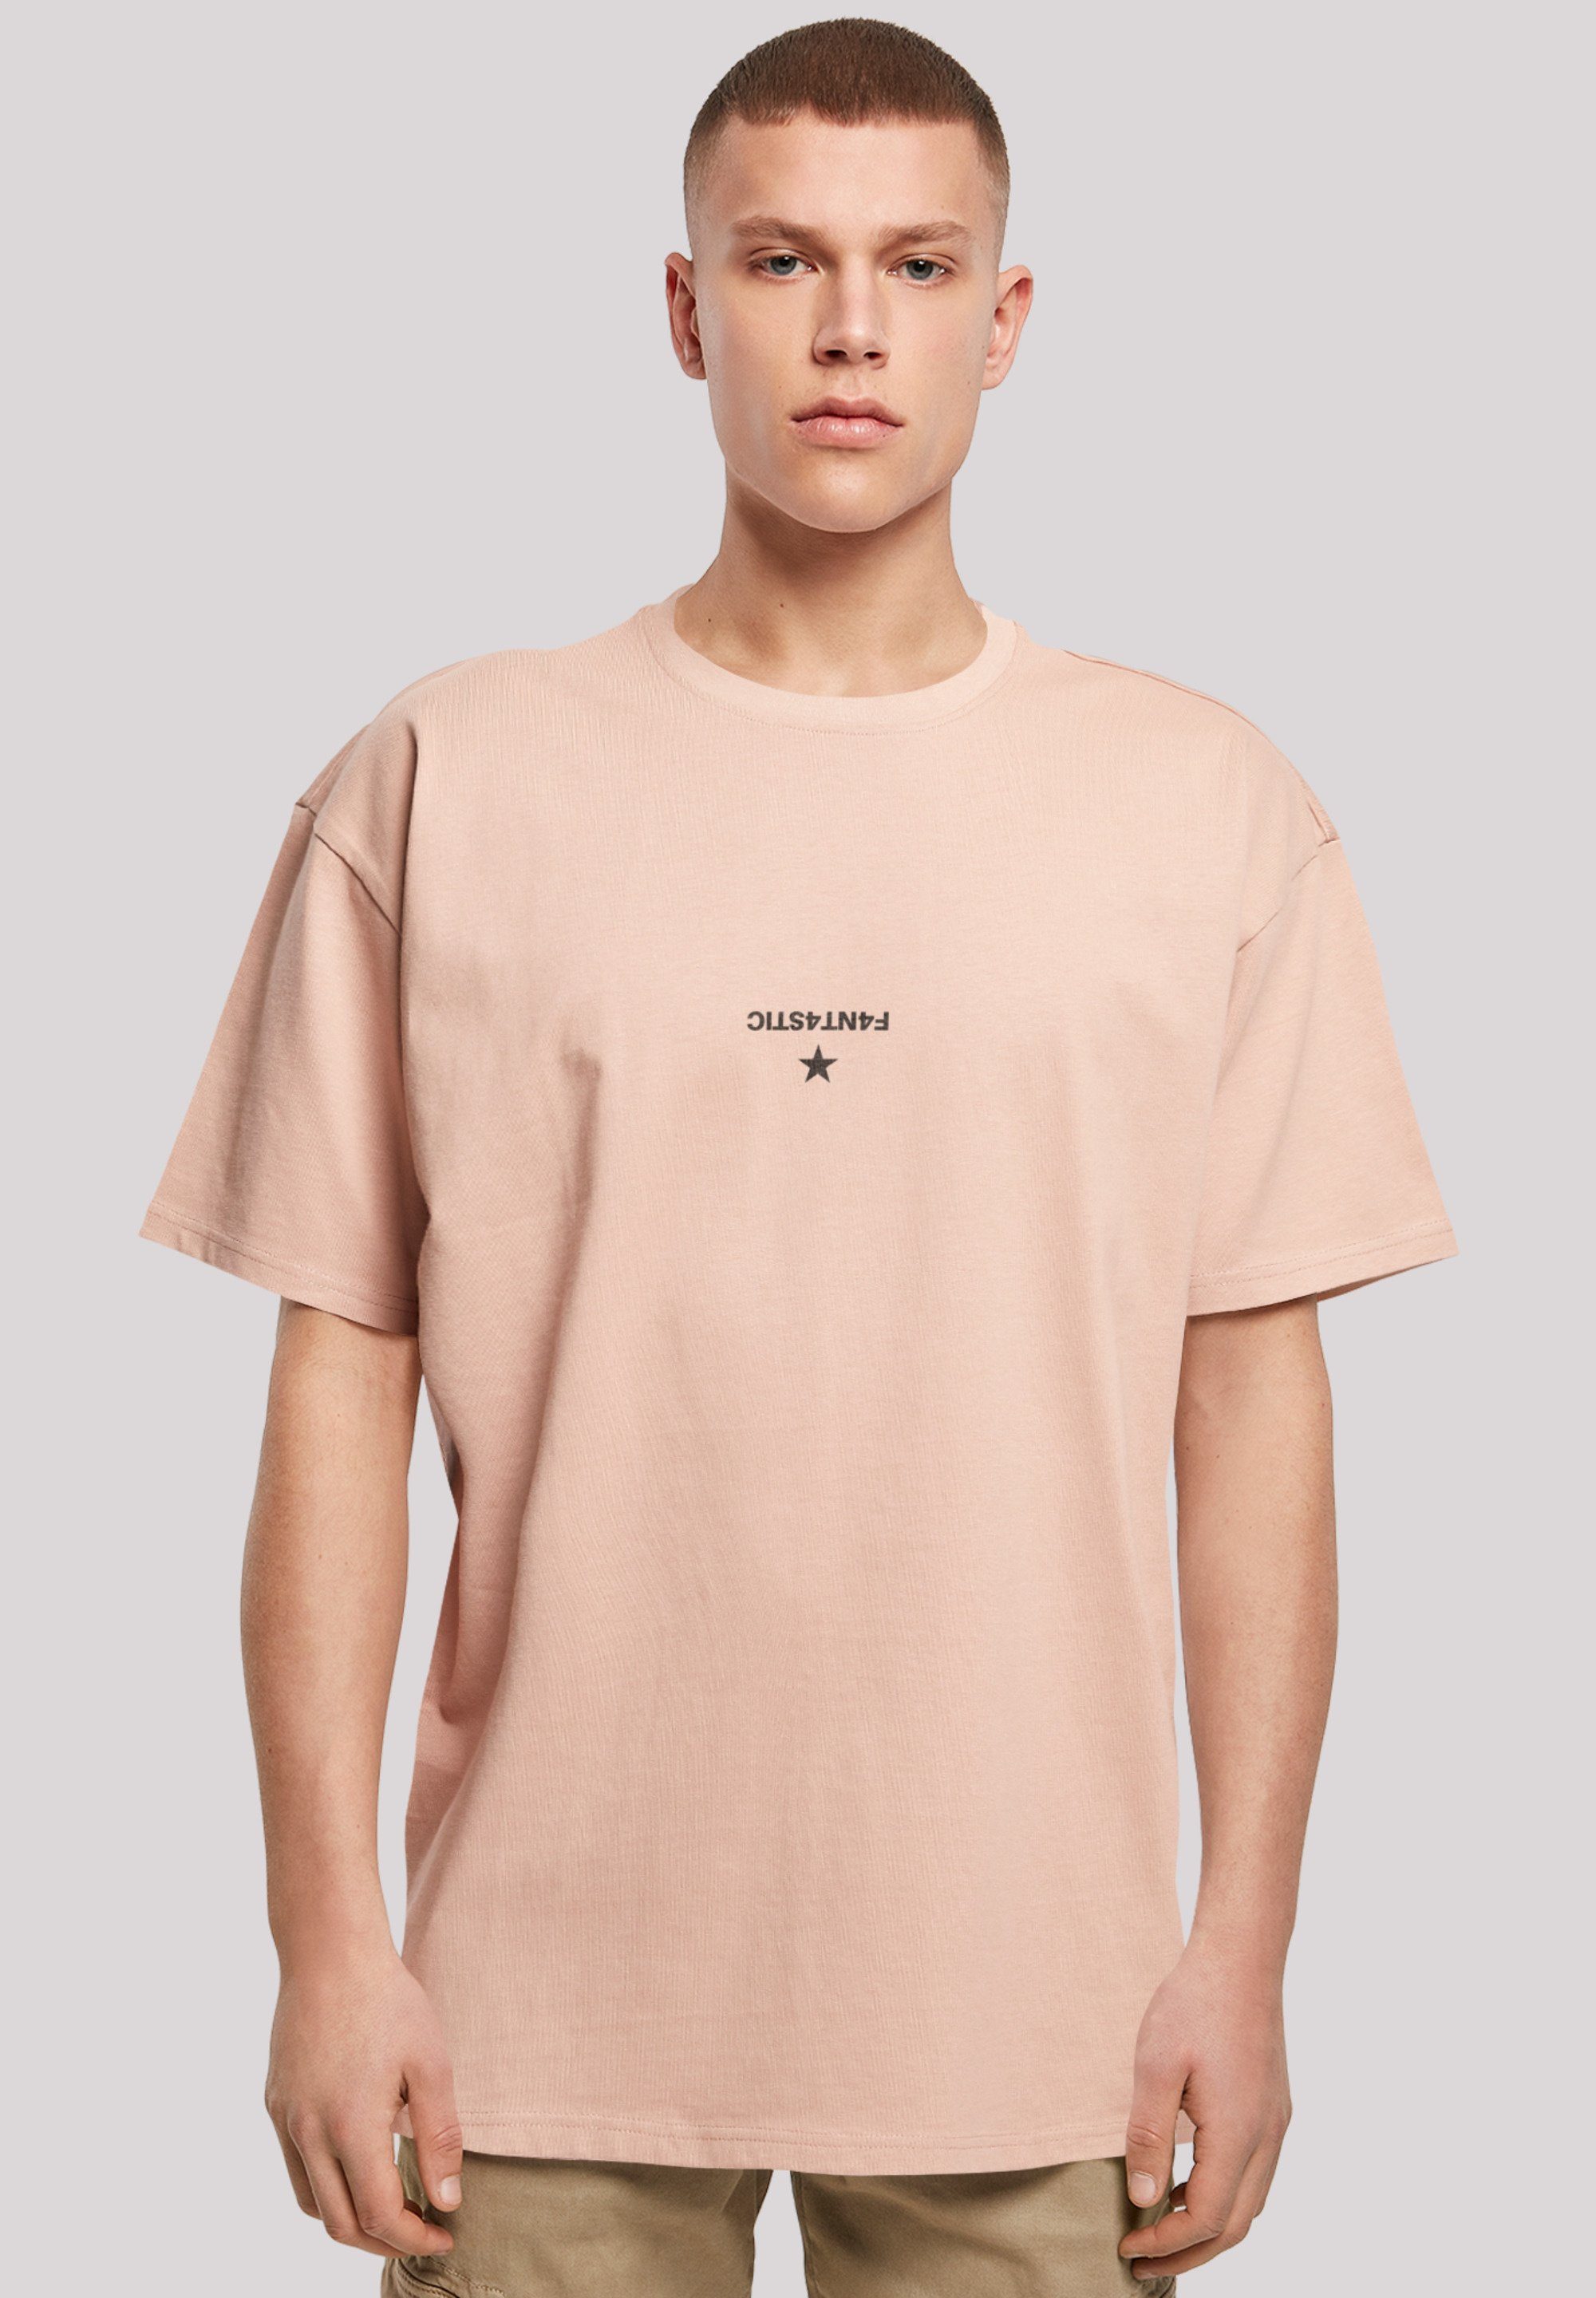 F4NT4STIC T-Shirt Grau Geometric amber Print